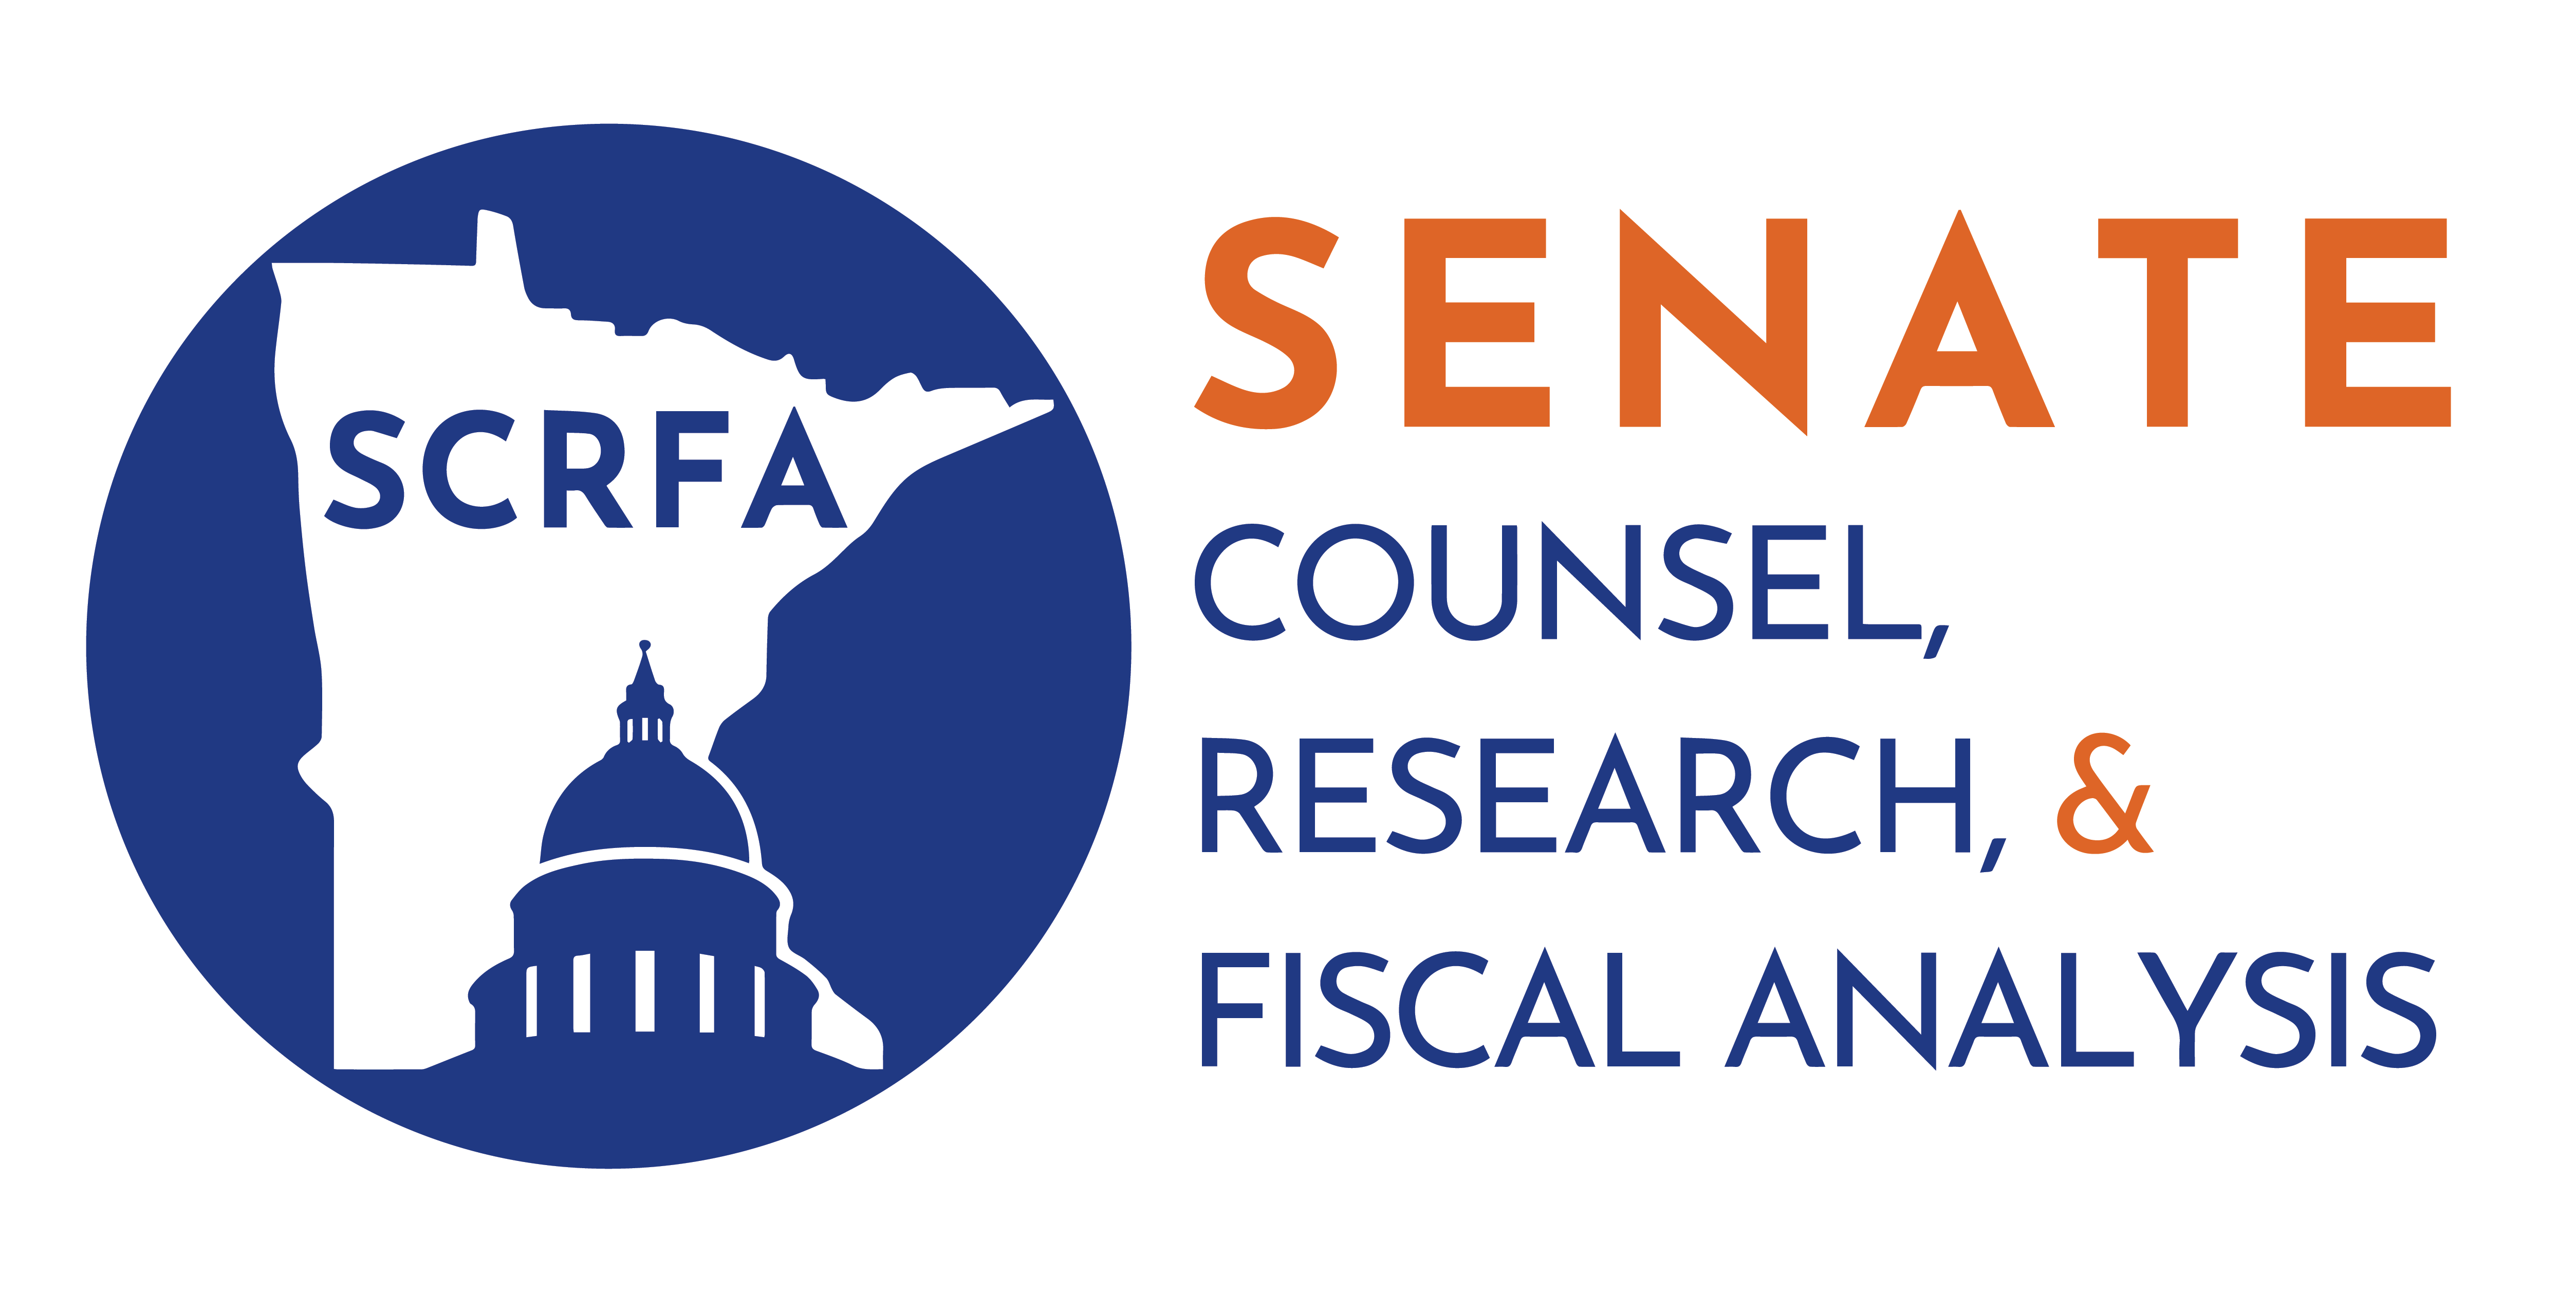 Minnesota Senate Counsel, Research and Fiscal Analysis logo